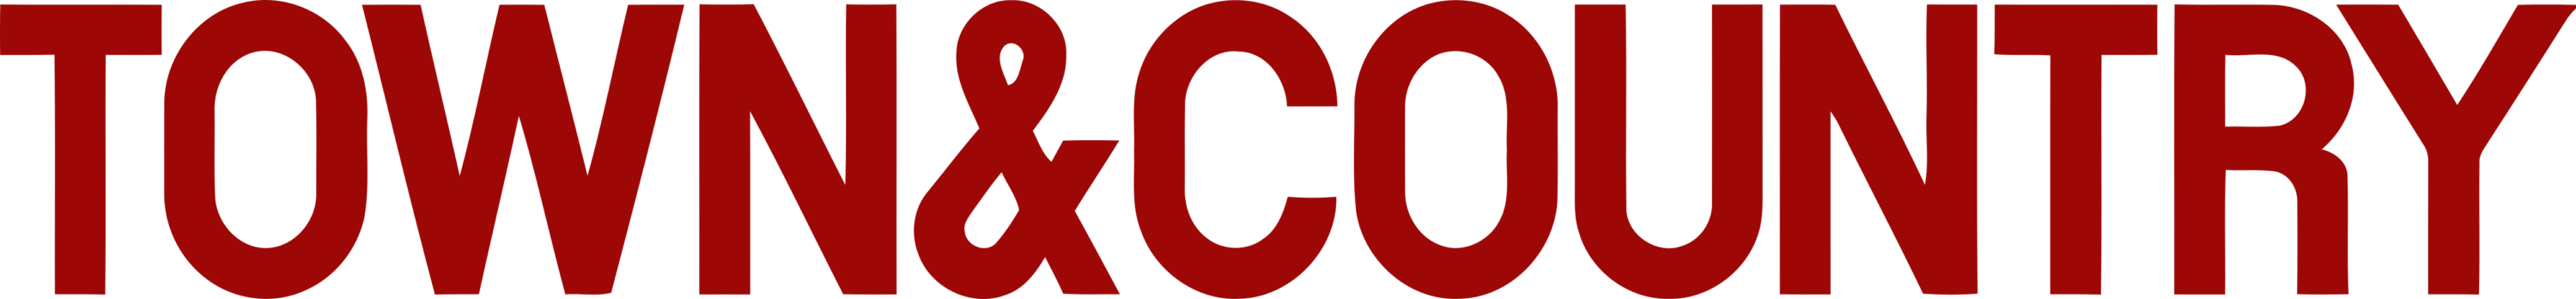 Town & Country (magazine) Logo